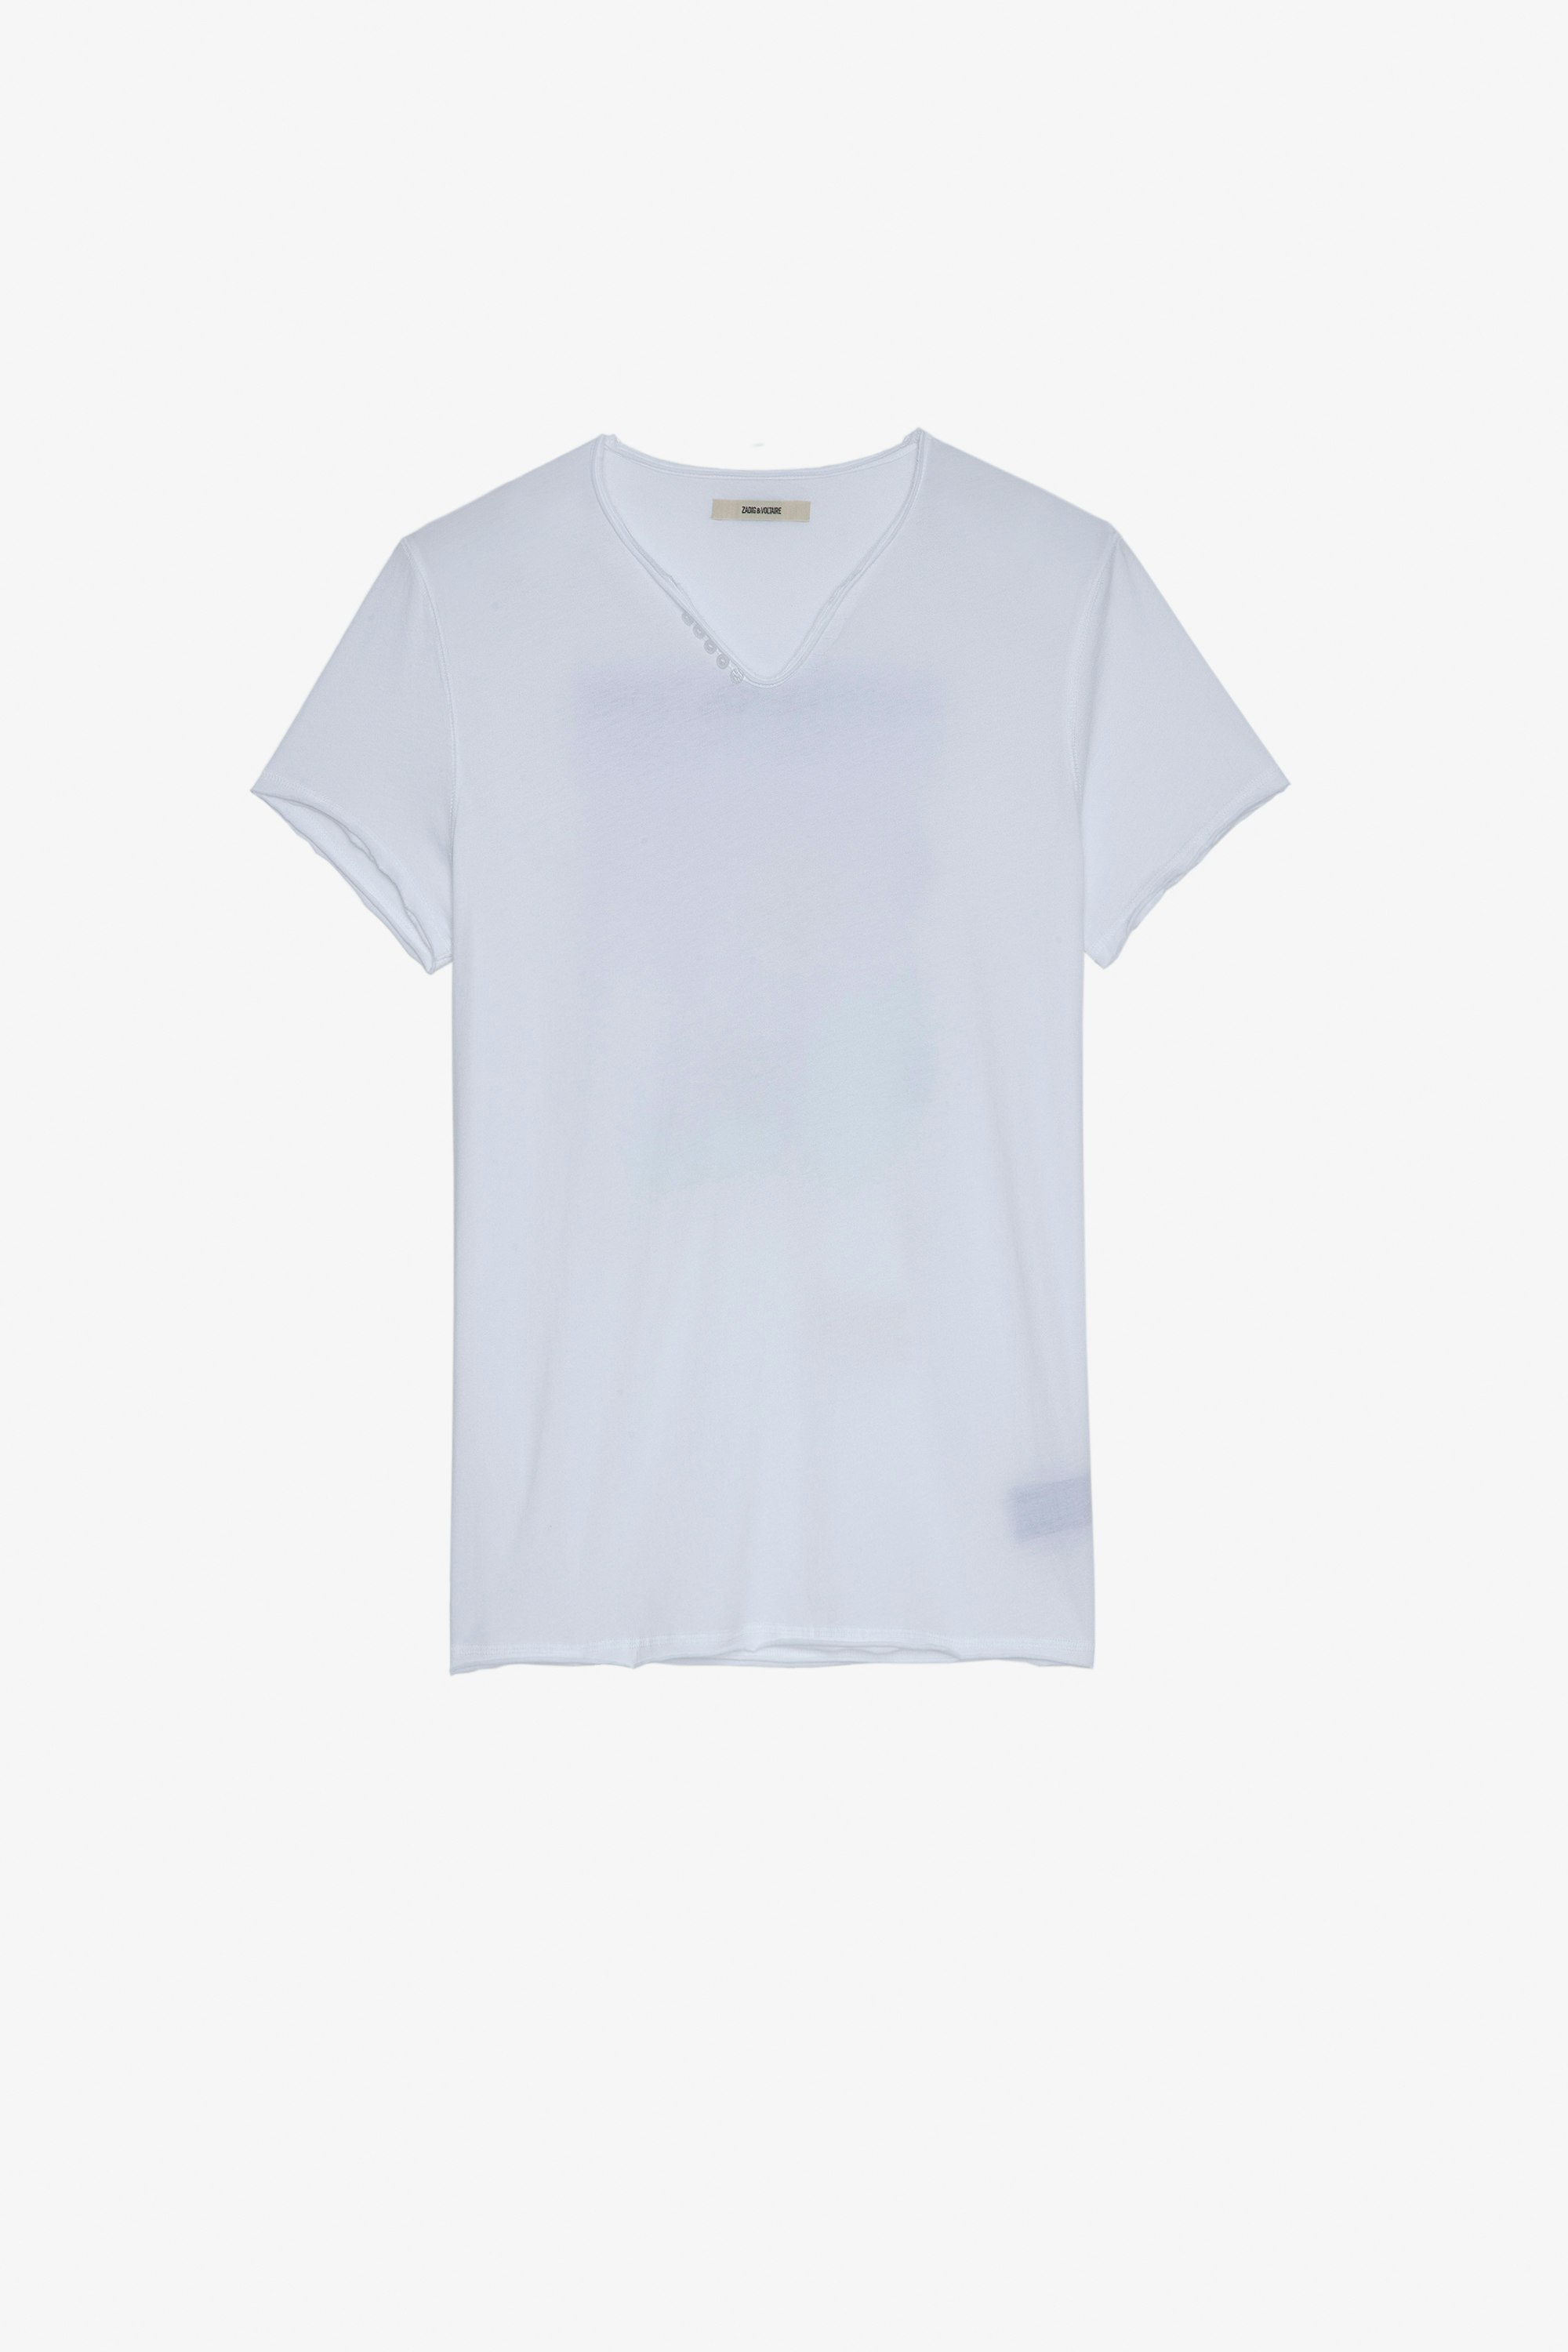 Monastir T-Shirt Men's white cotton Henley t-shirt with palm tree print on the back